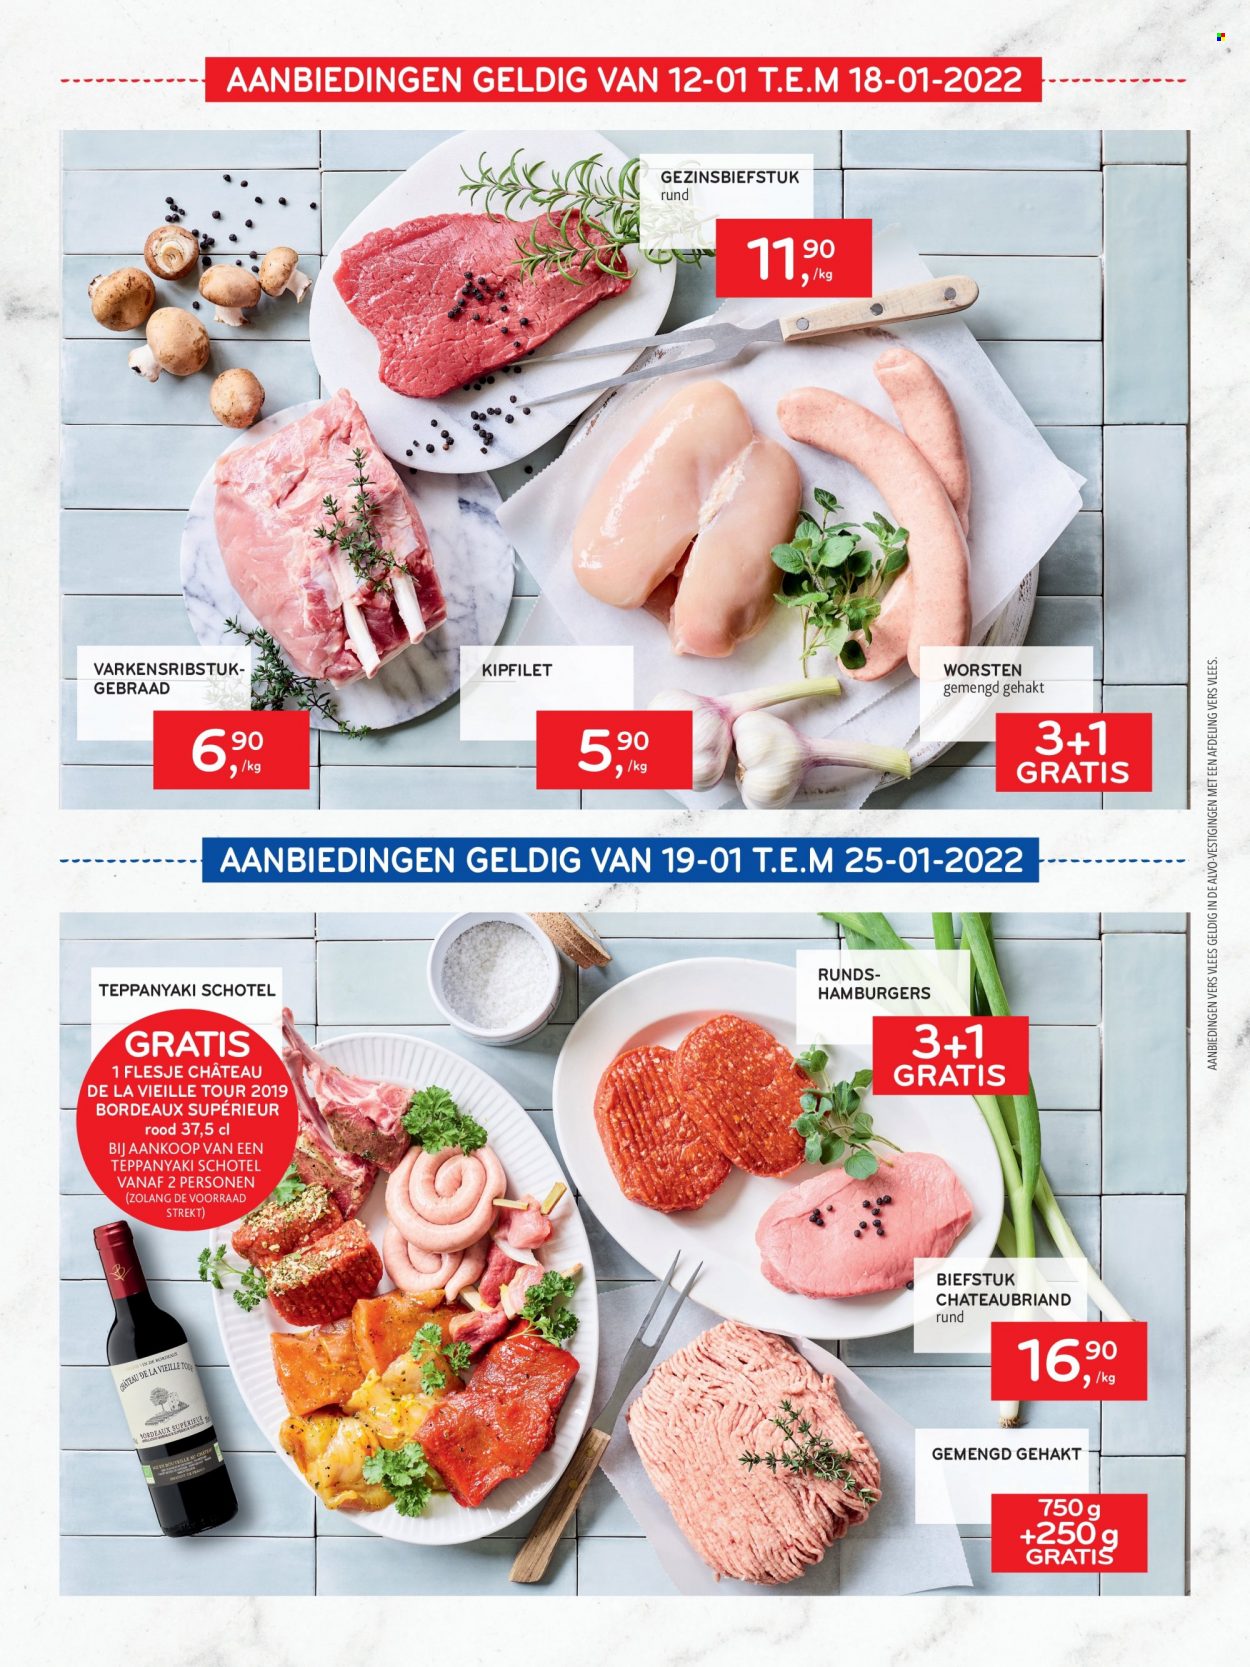 thumbnail - Alvo-aanbieding - 12/01/2022 - 25/01/2022 -  producten in de aanbieding - kipfilet, biefstuk, hamburger. Pagina 4.